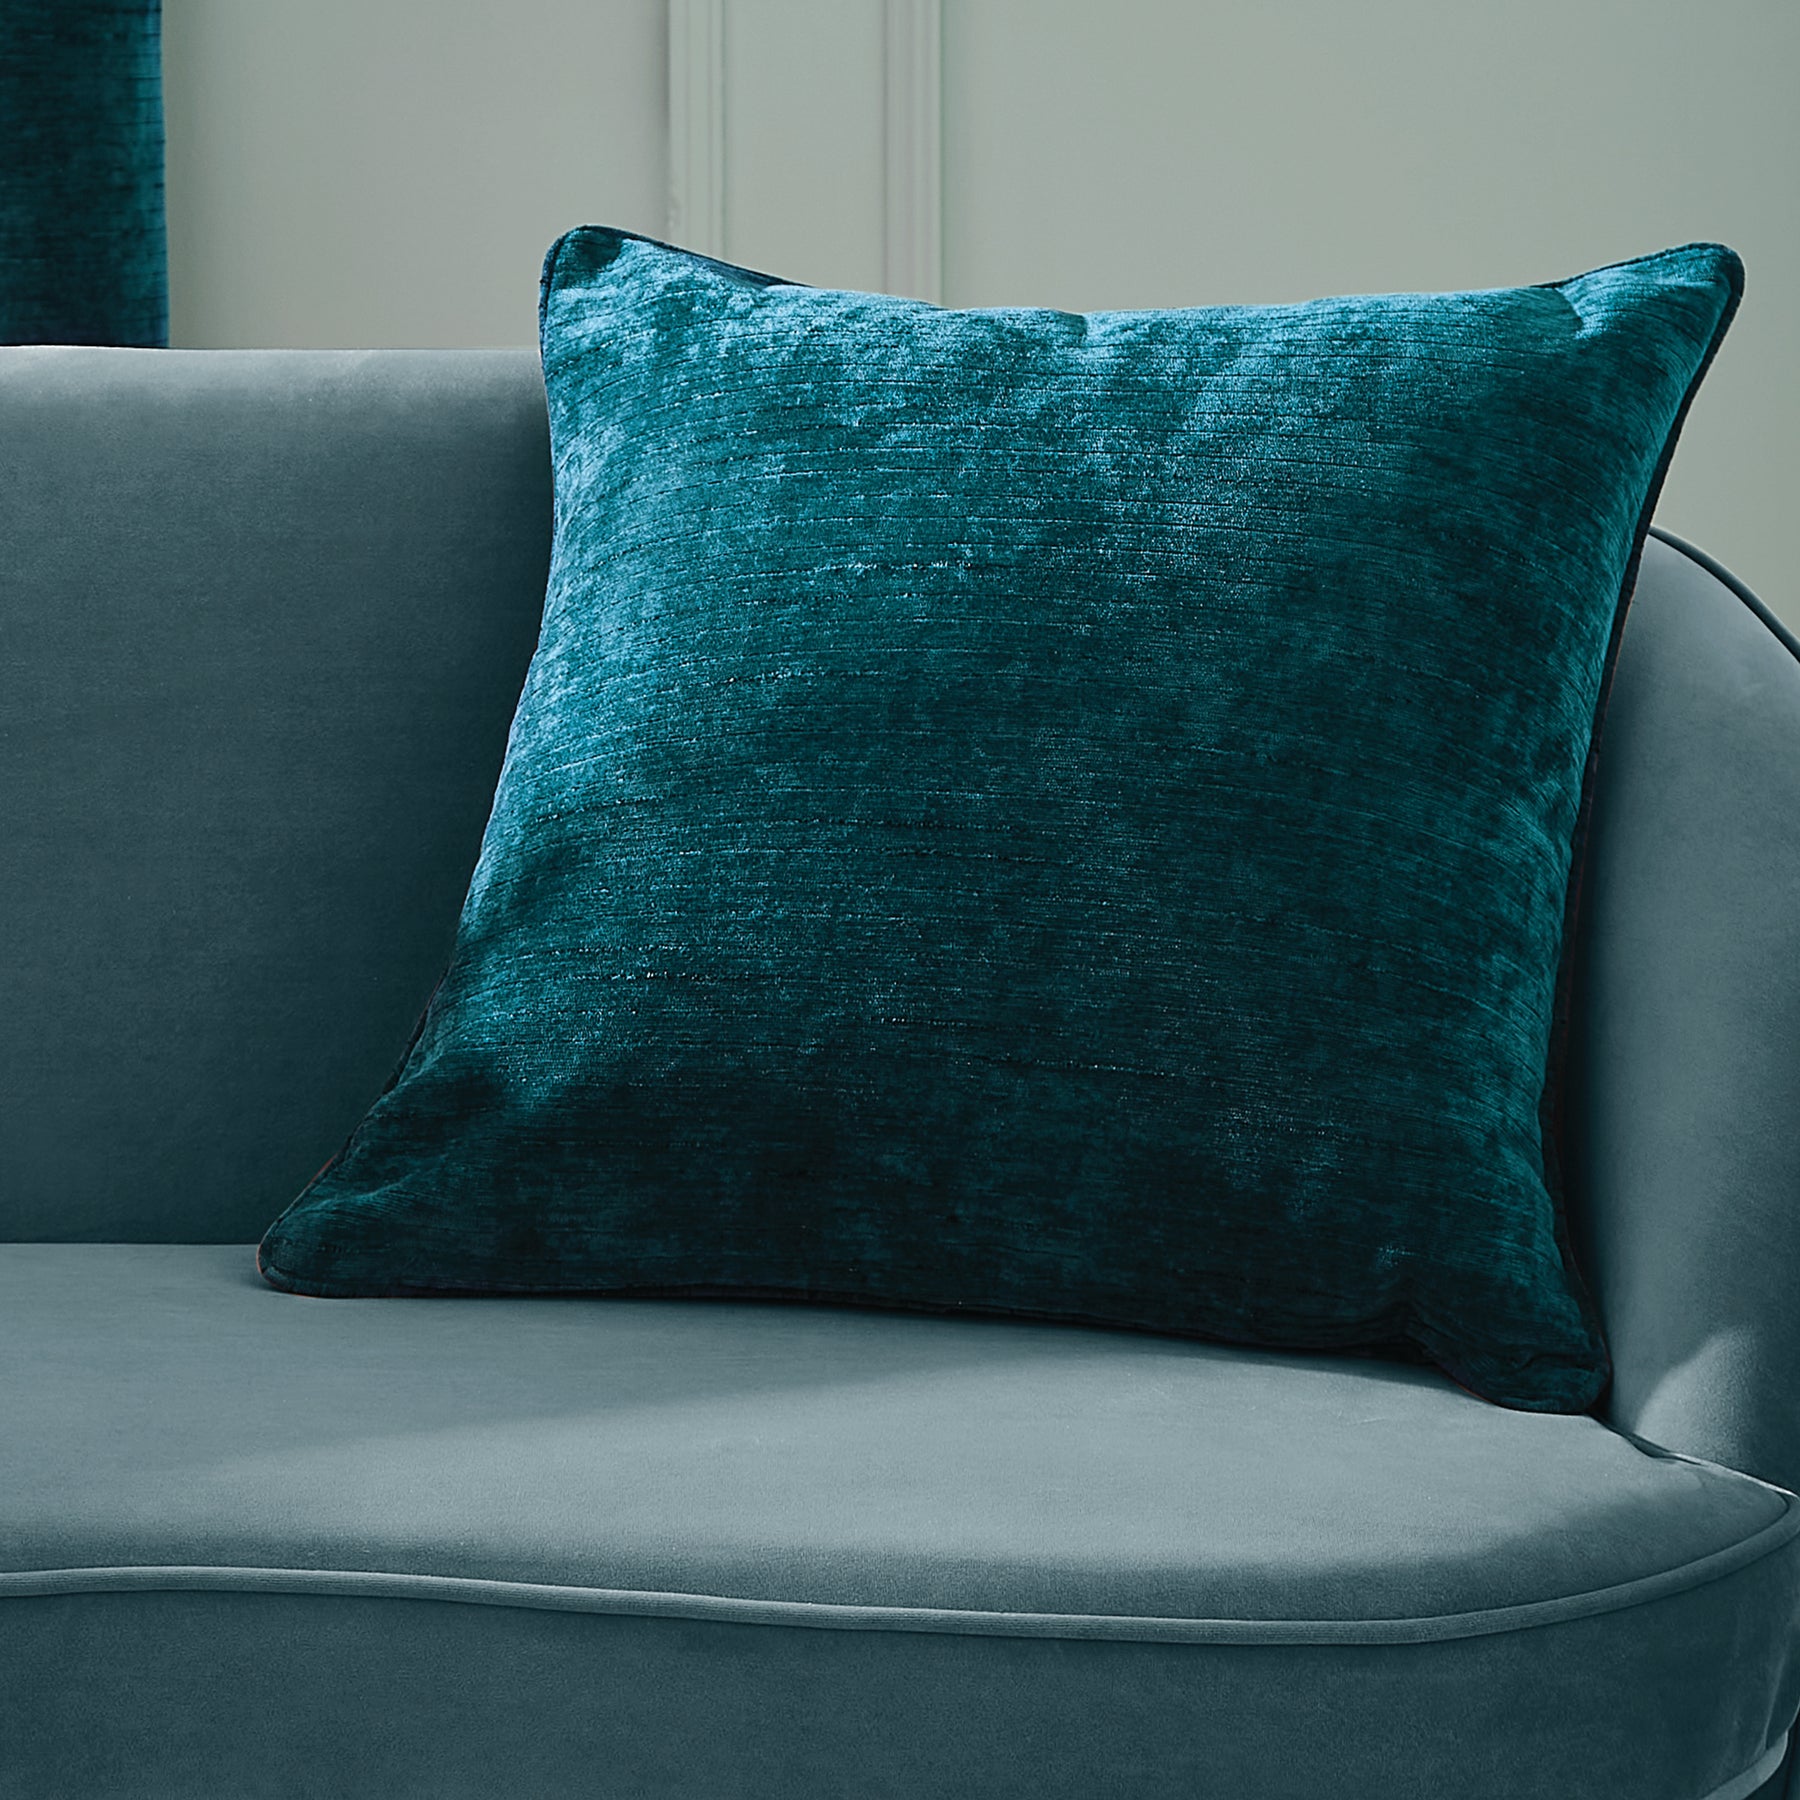 Hyperion Selene Luxury Chenille Filled Cushion 55cm x 55cm Rich Teal